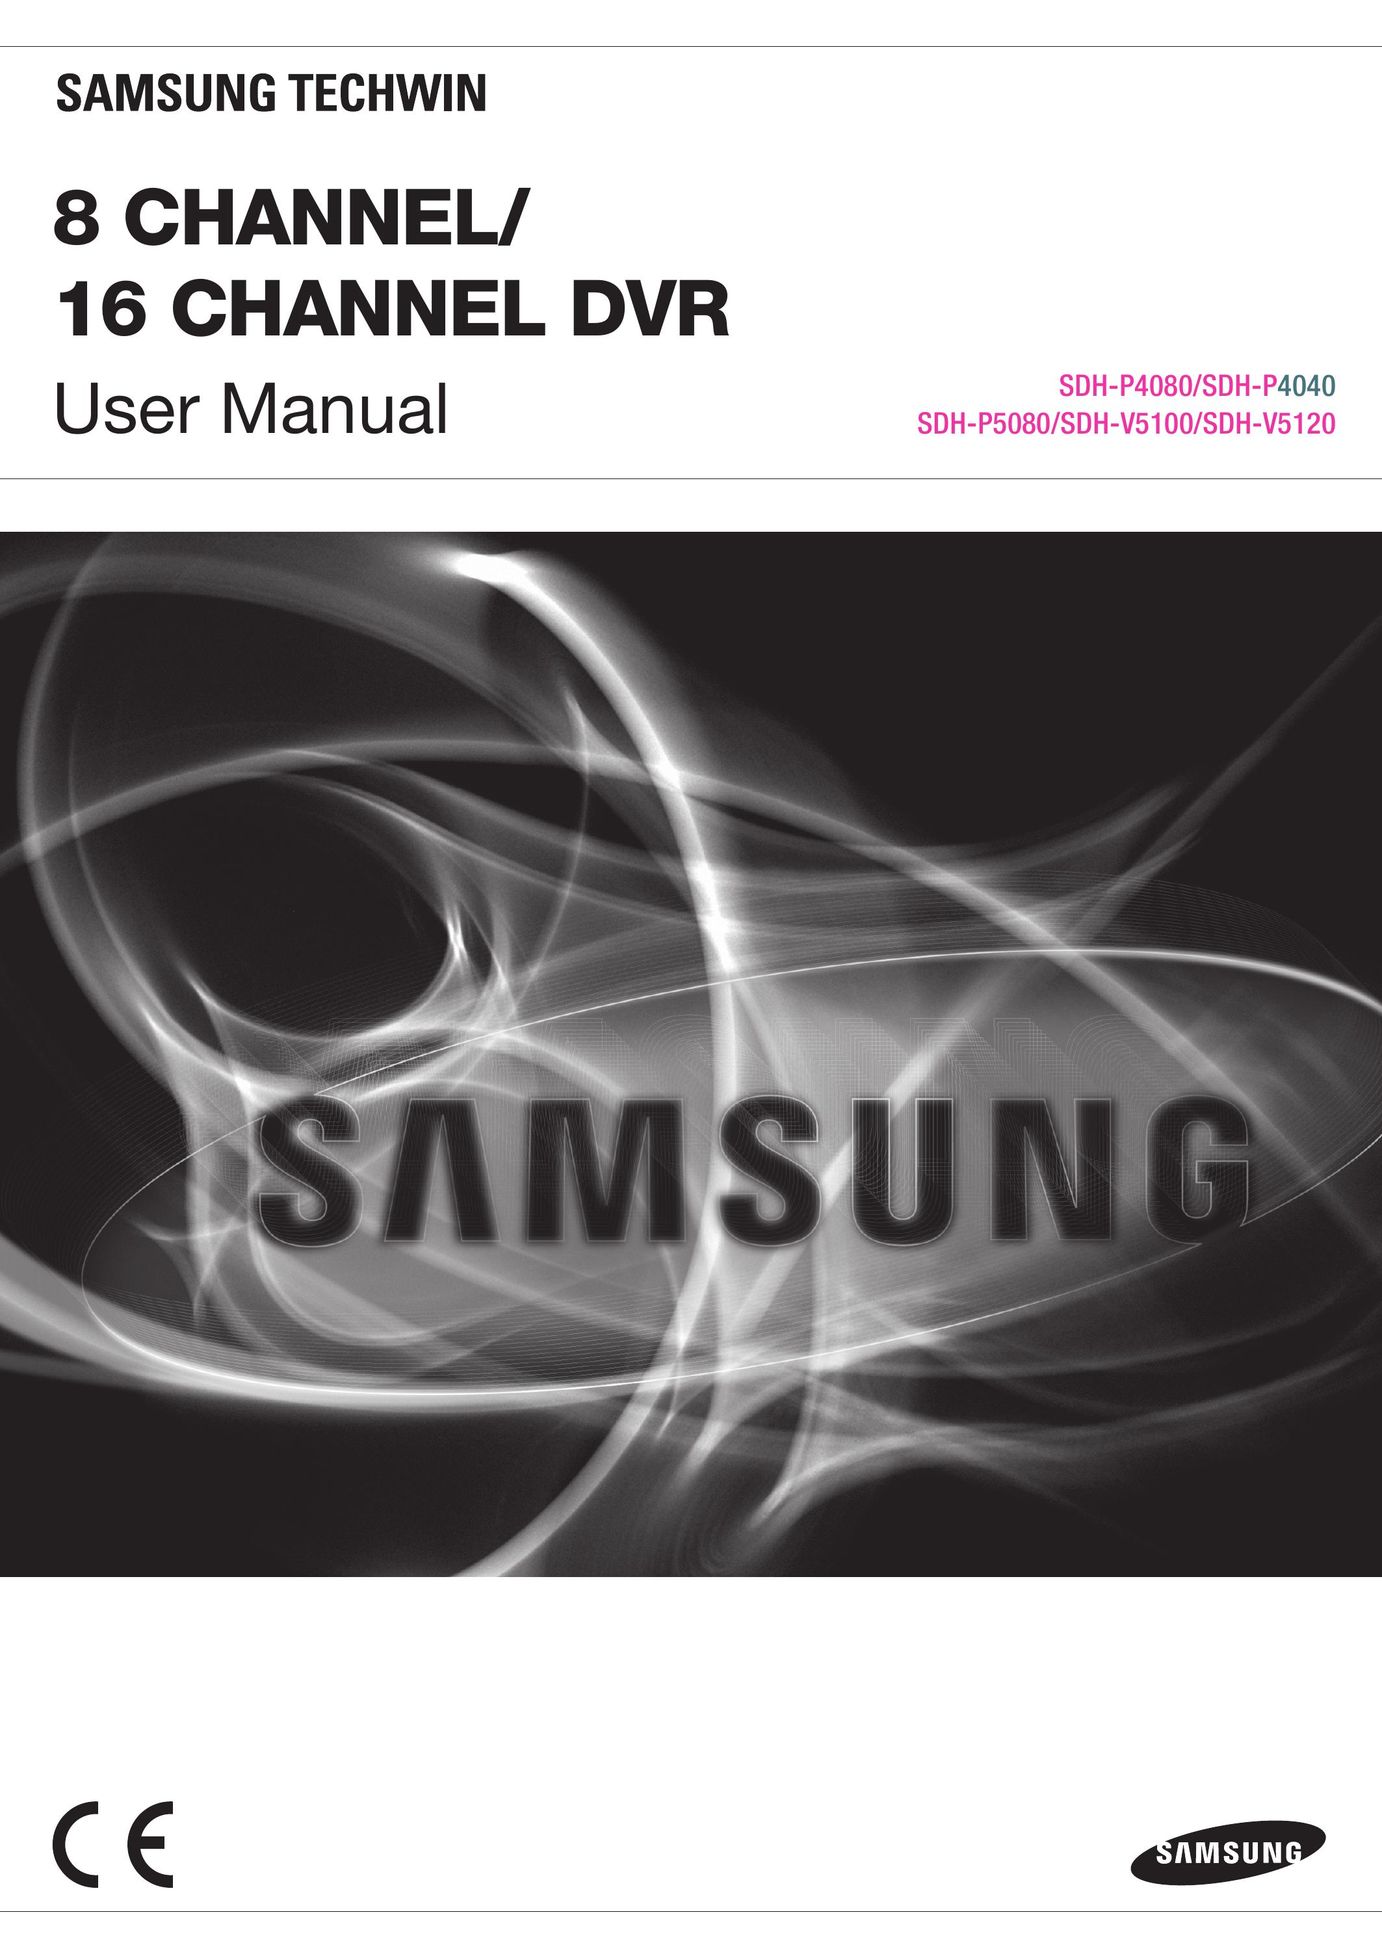 Samsung SDHP4080 DVR User Manual